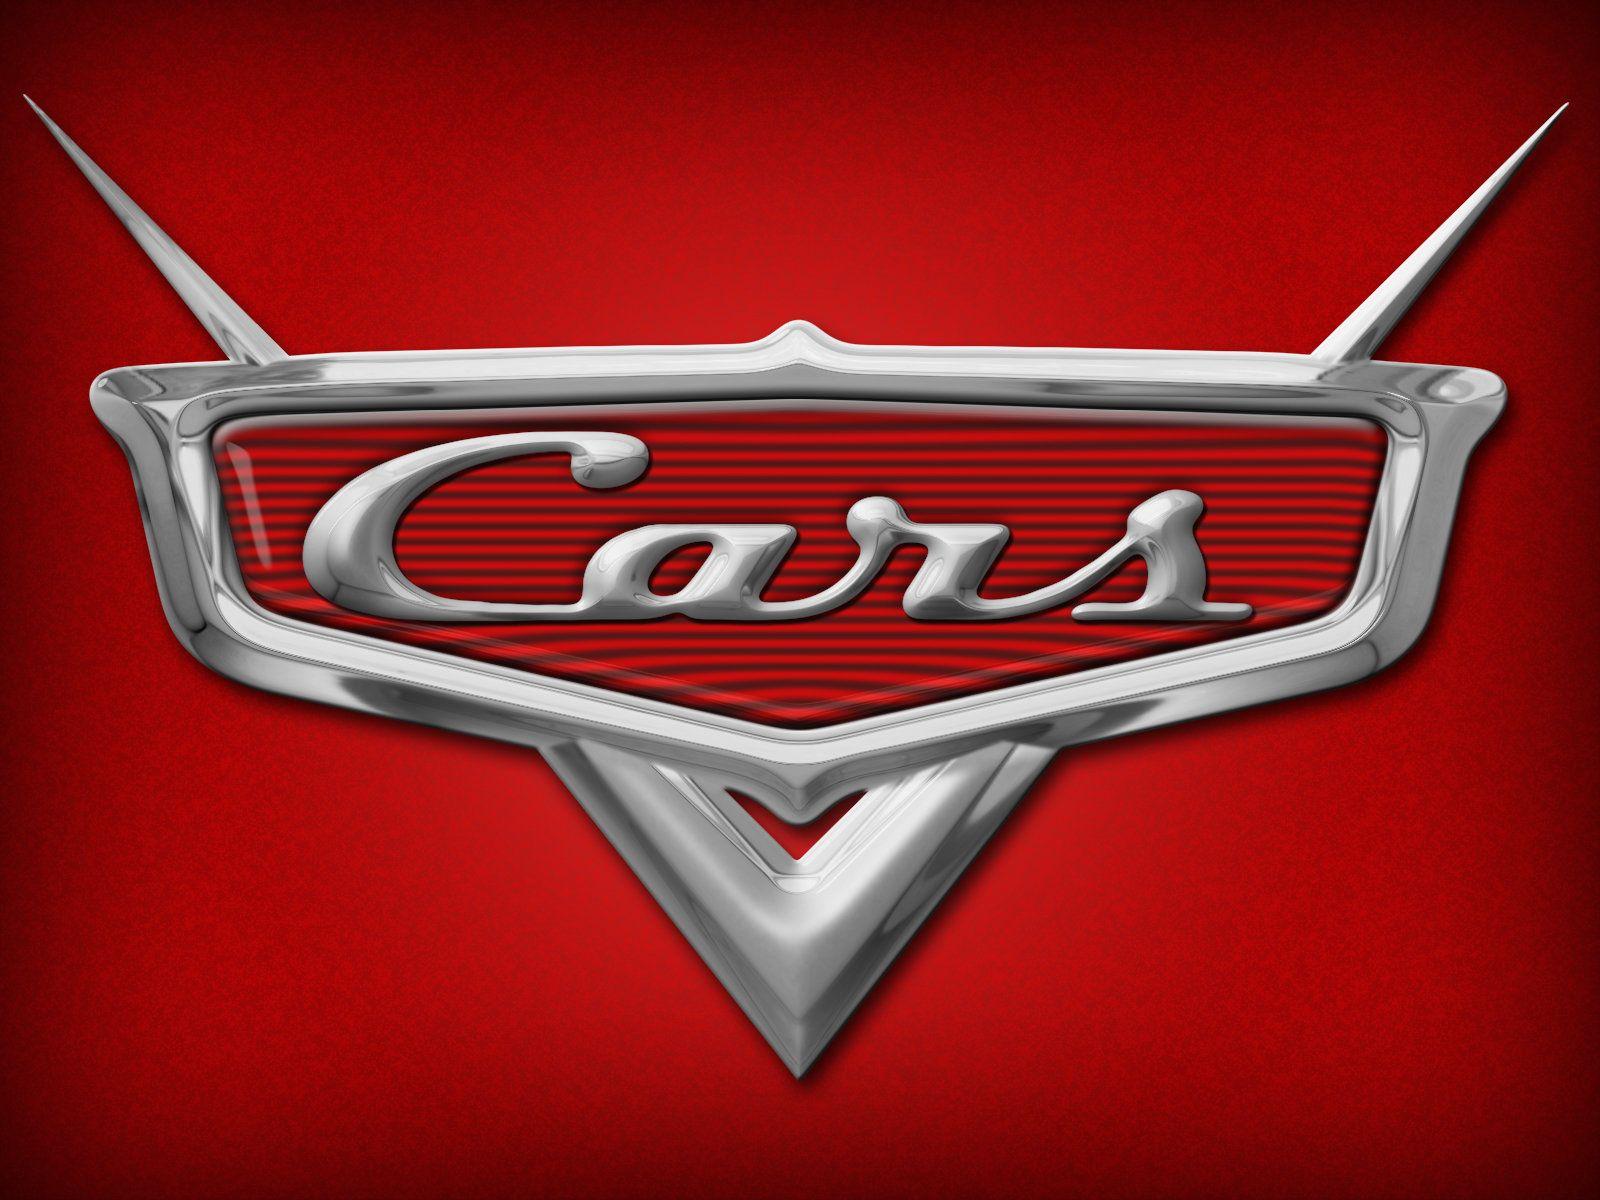 Disney Cars Movie Logo - Cars Logo PSD by vicing on DeviantArt